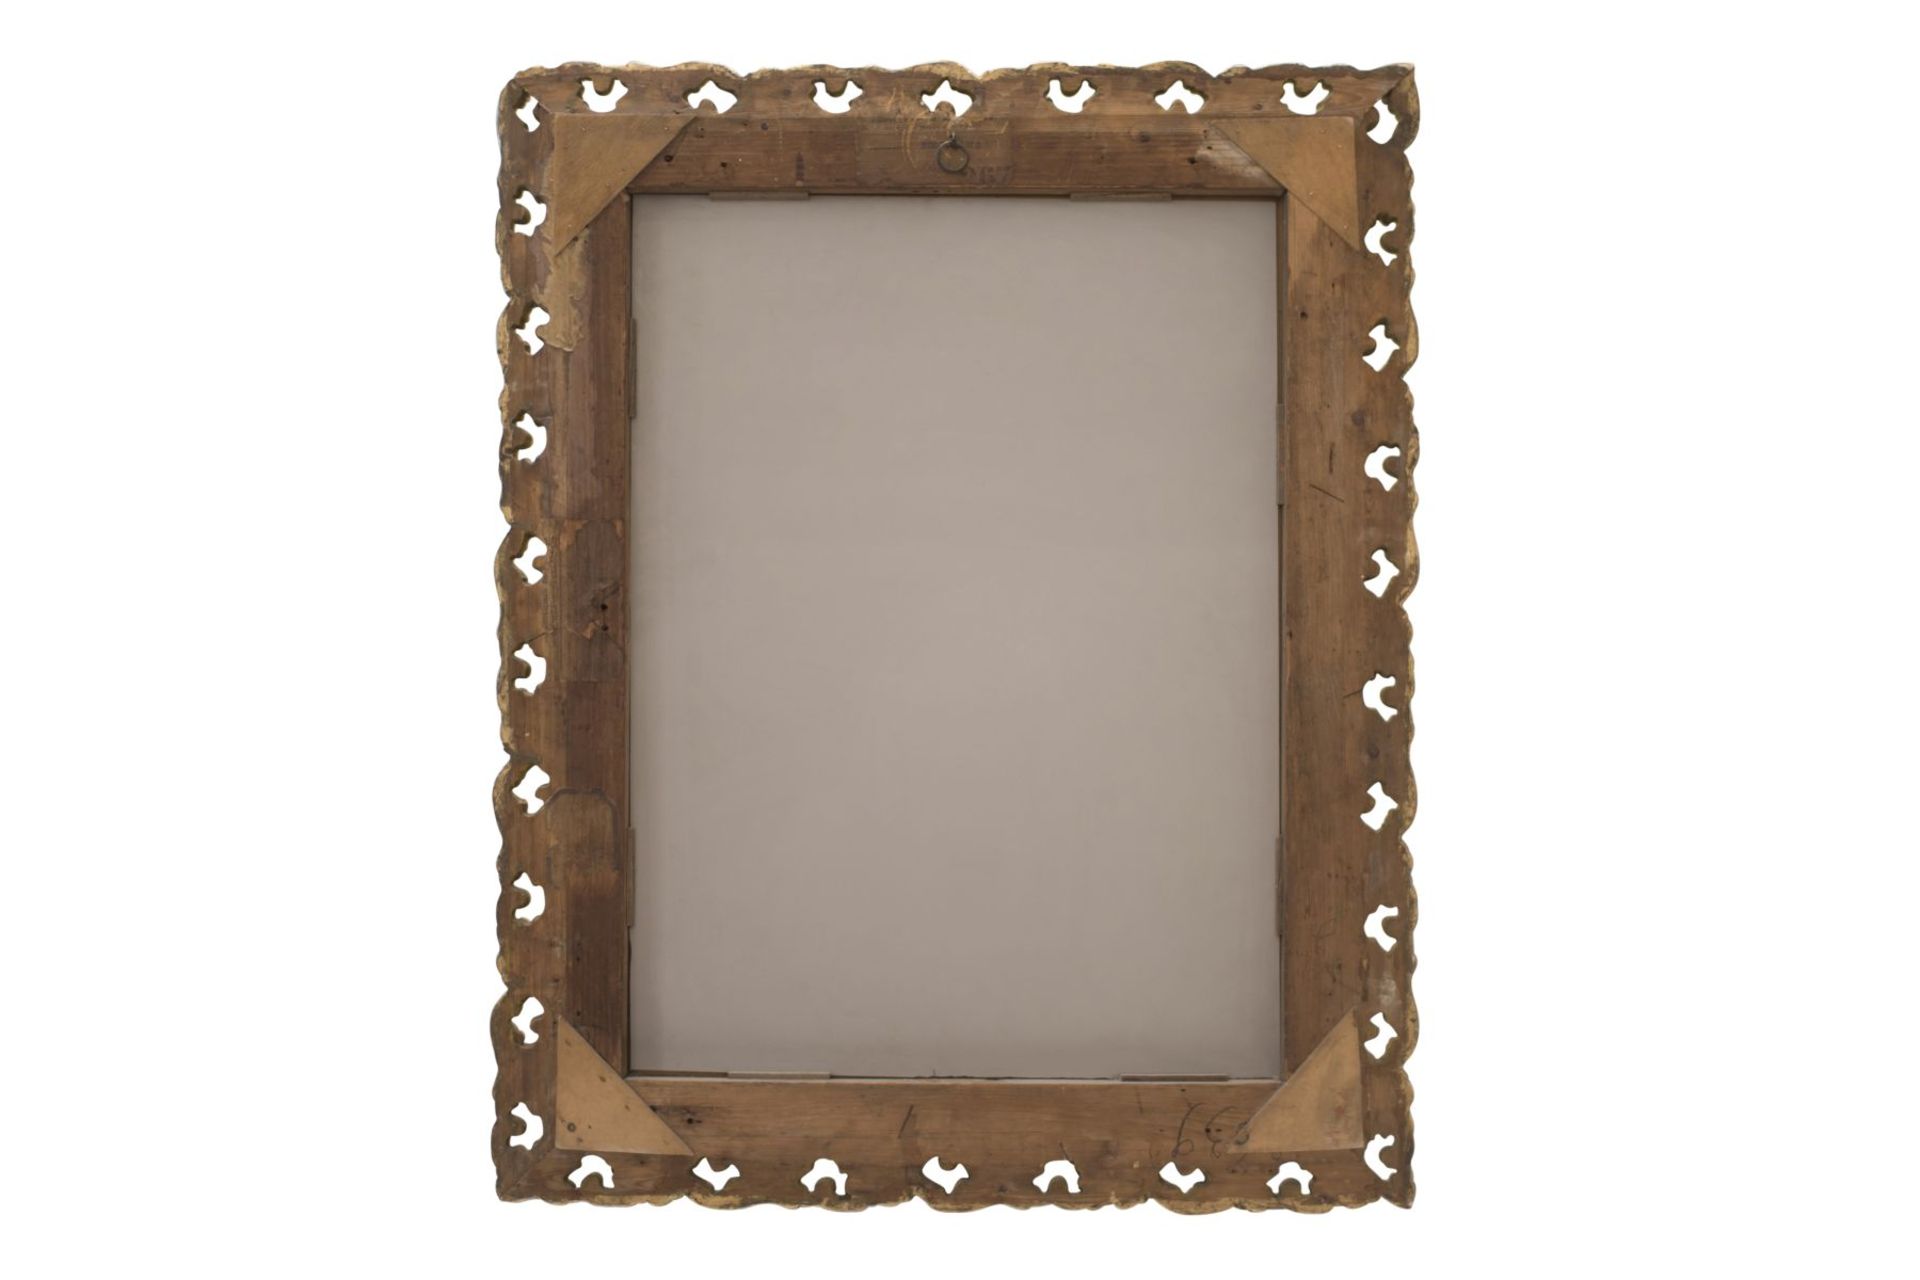 Decorative mirror - Image 5 of 5